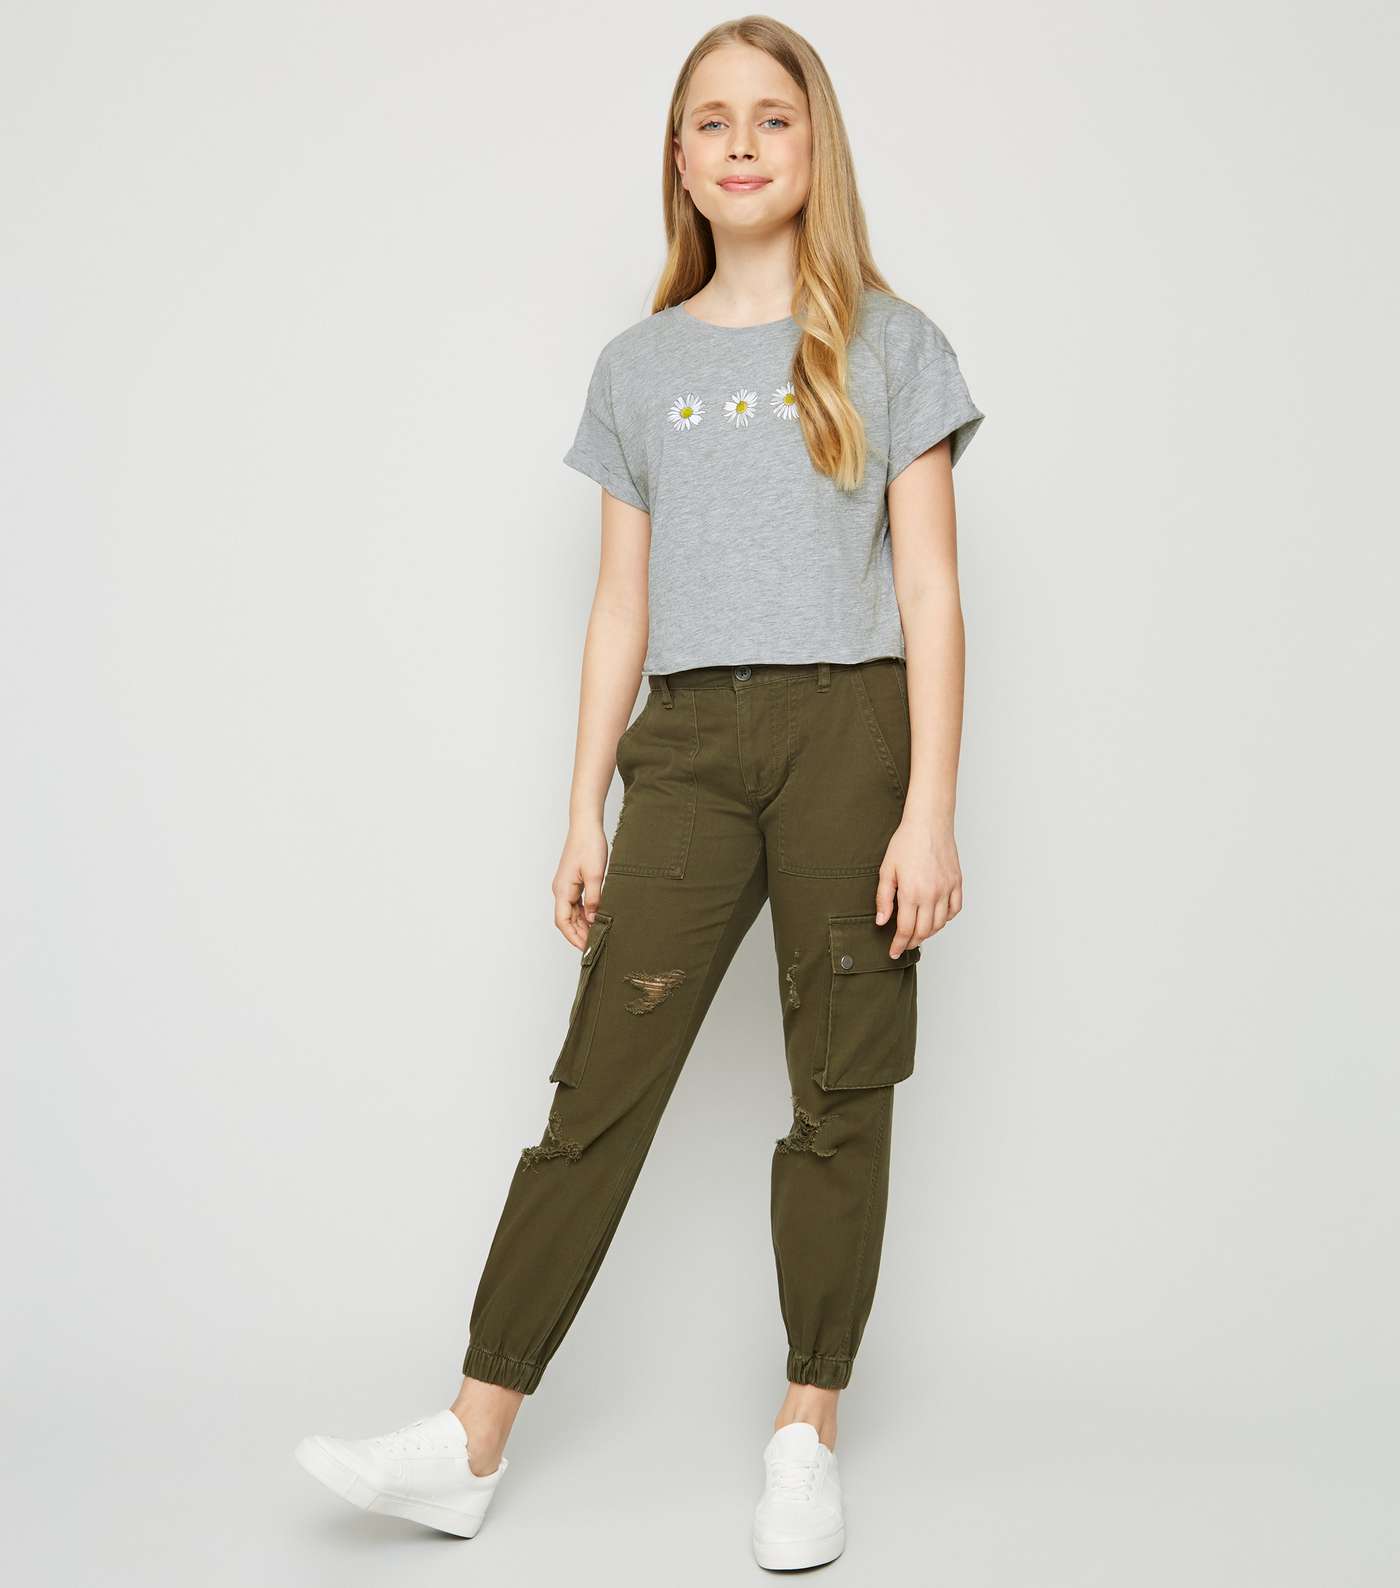 Girls Grey Daisy T-Shirt Image 2